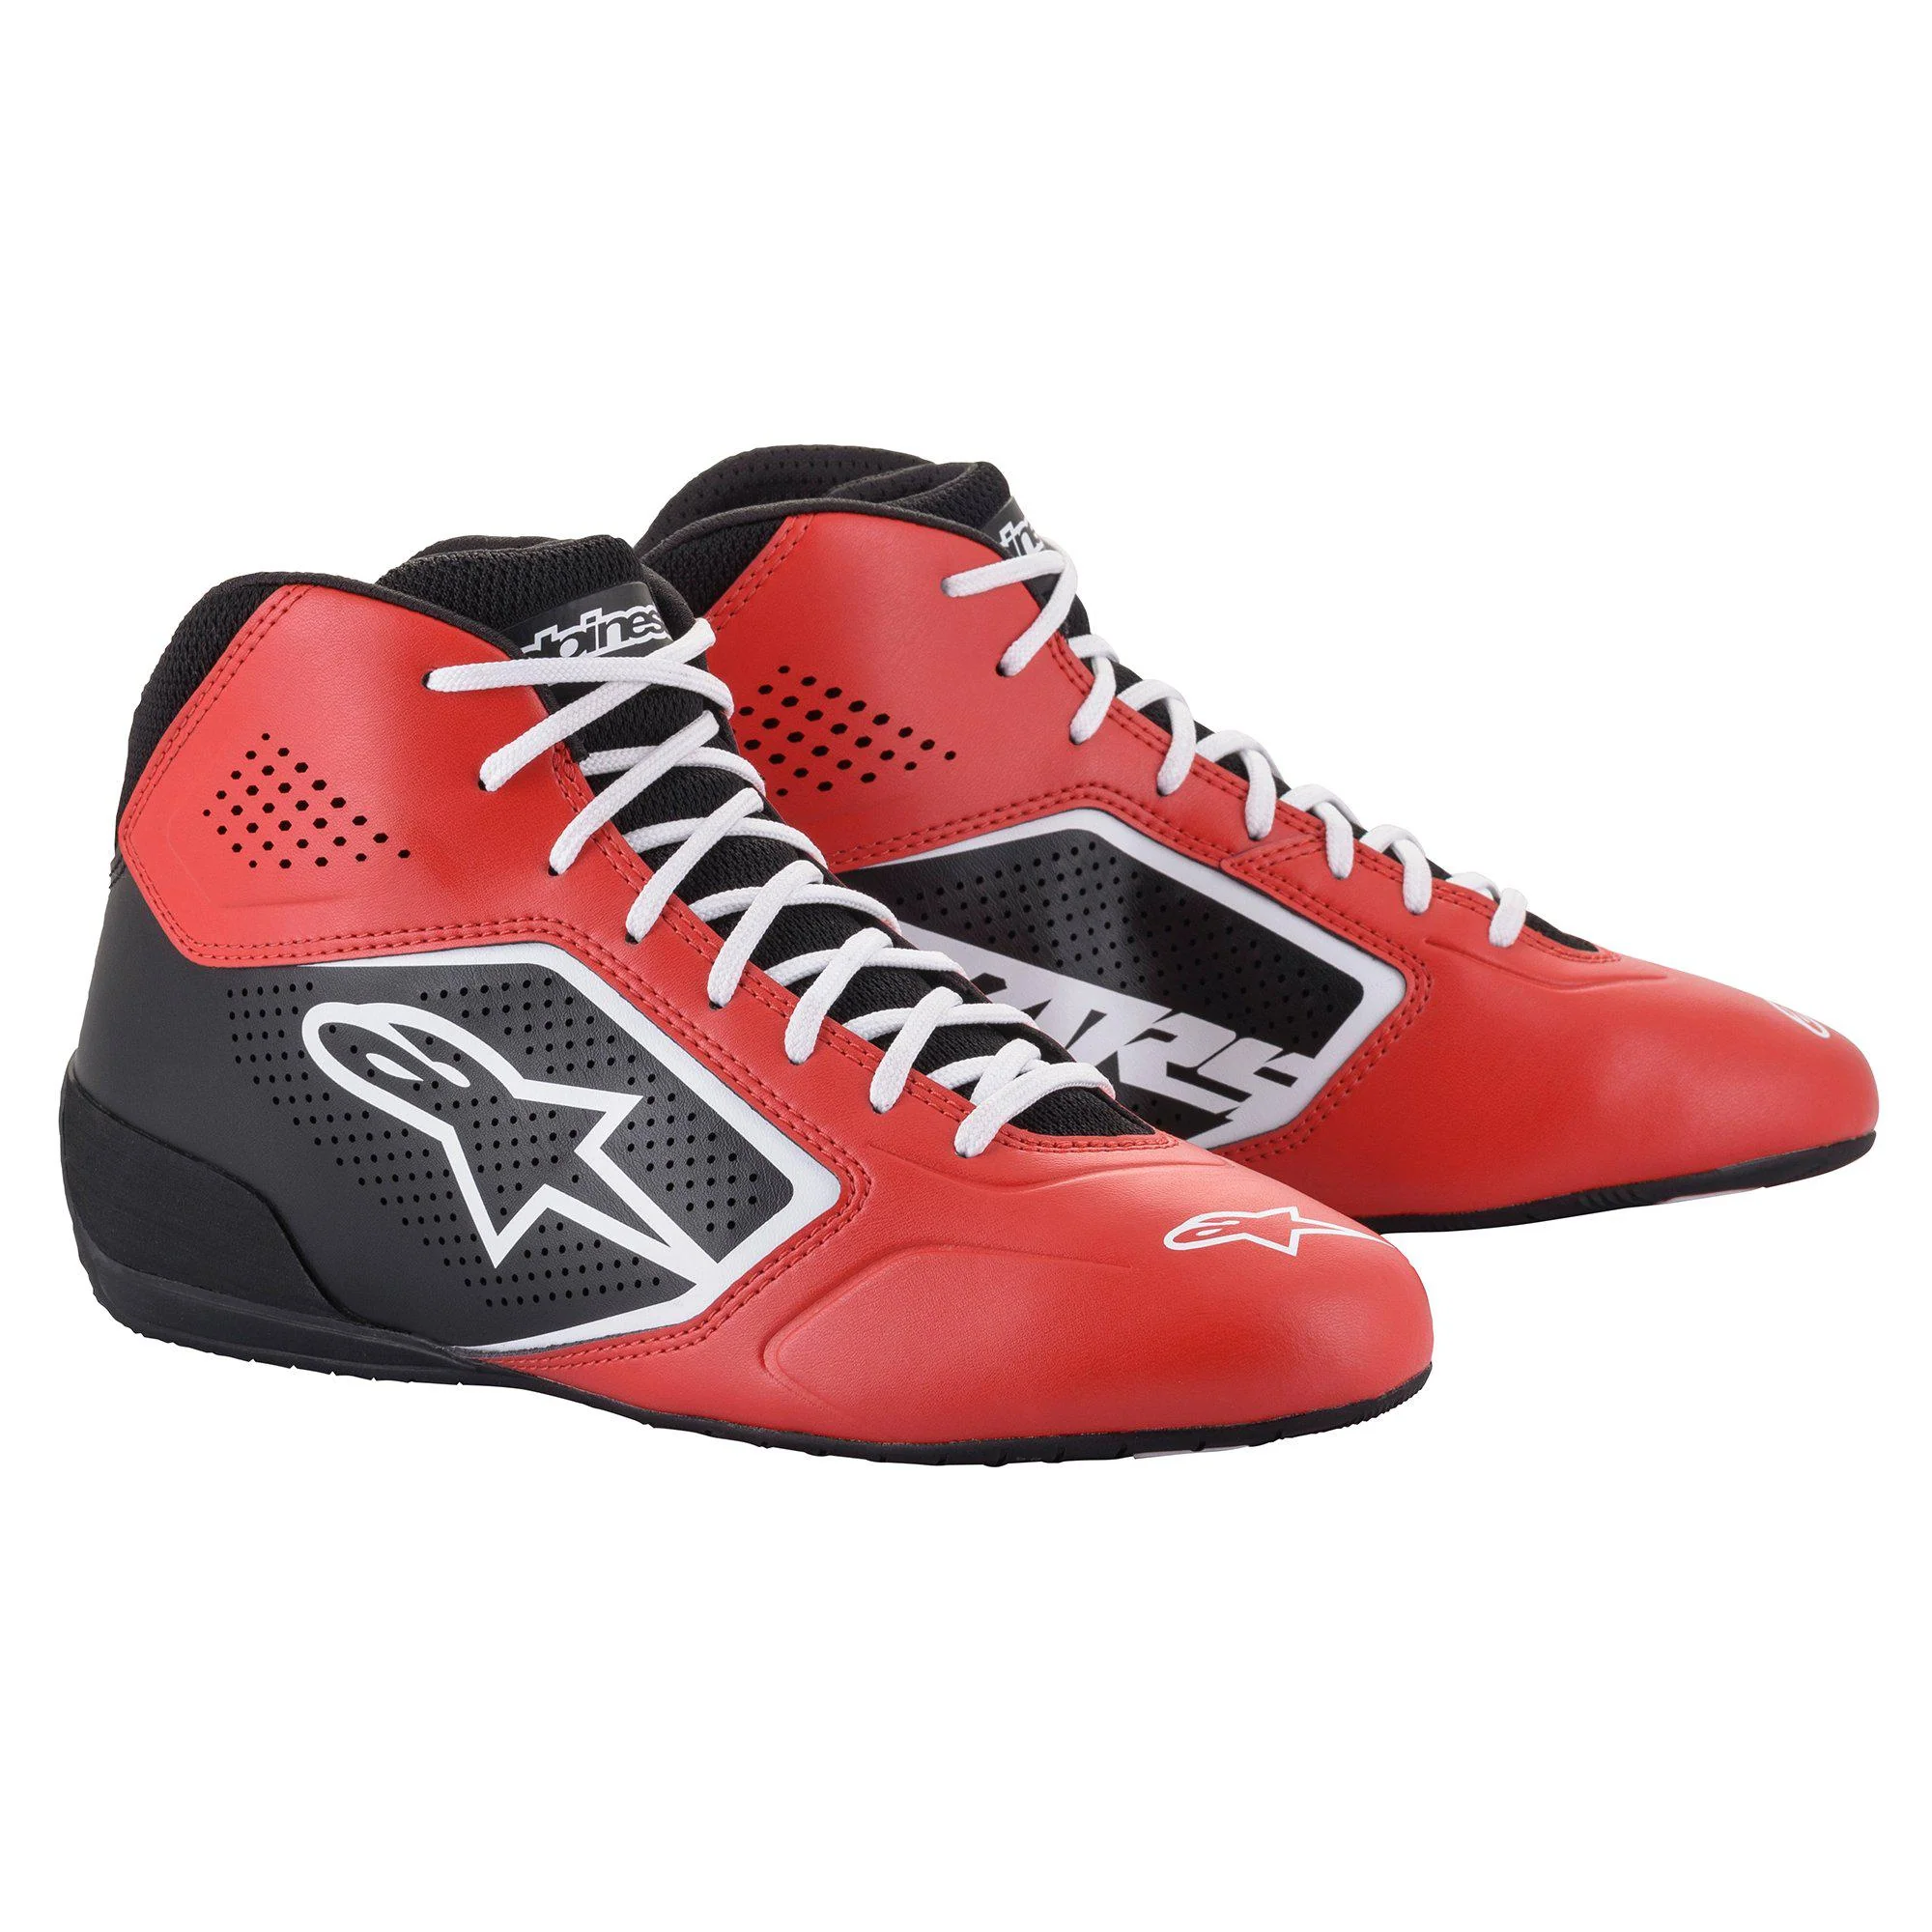 Alpinestars TECH-1 K START v2 ботинки для картинга, красный/черный/белый, р-р 41(EUR)/8.5(US)/7.5(UK. DARK-STOCK.RU